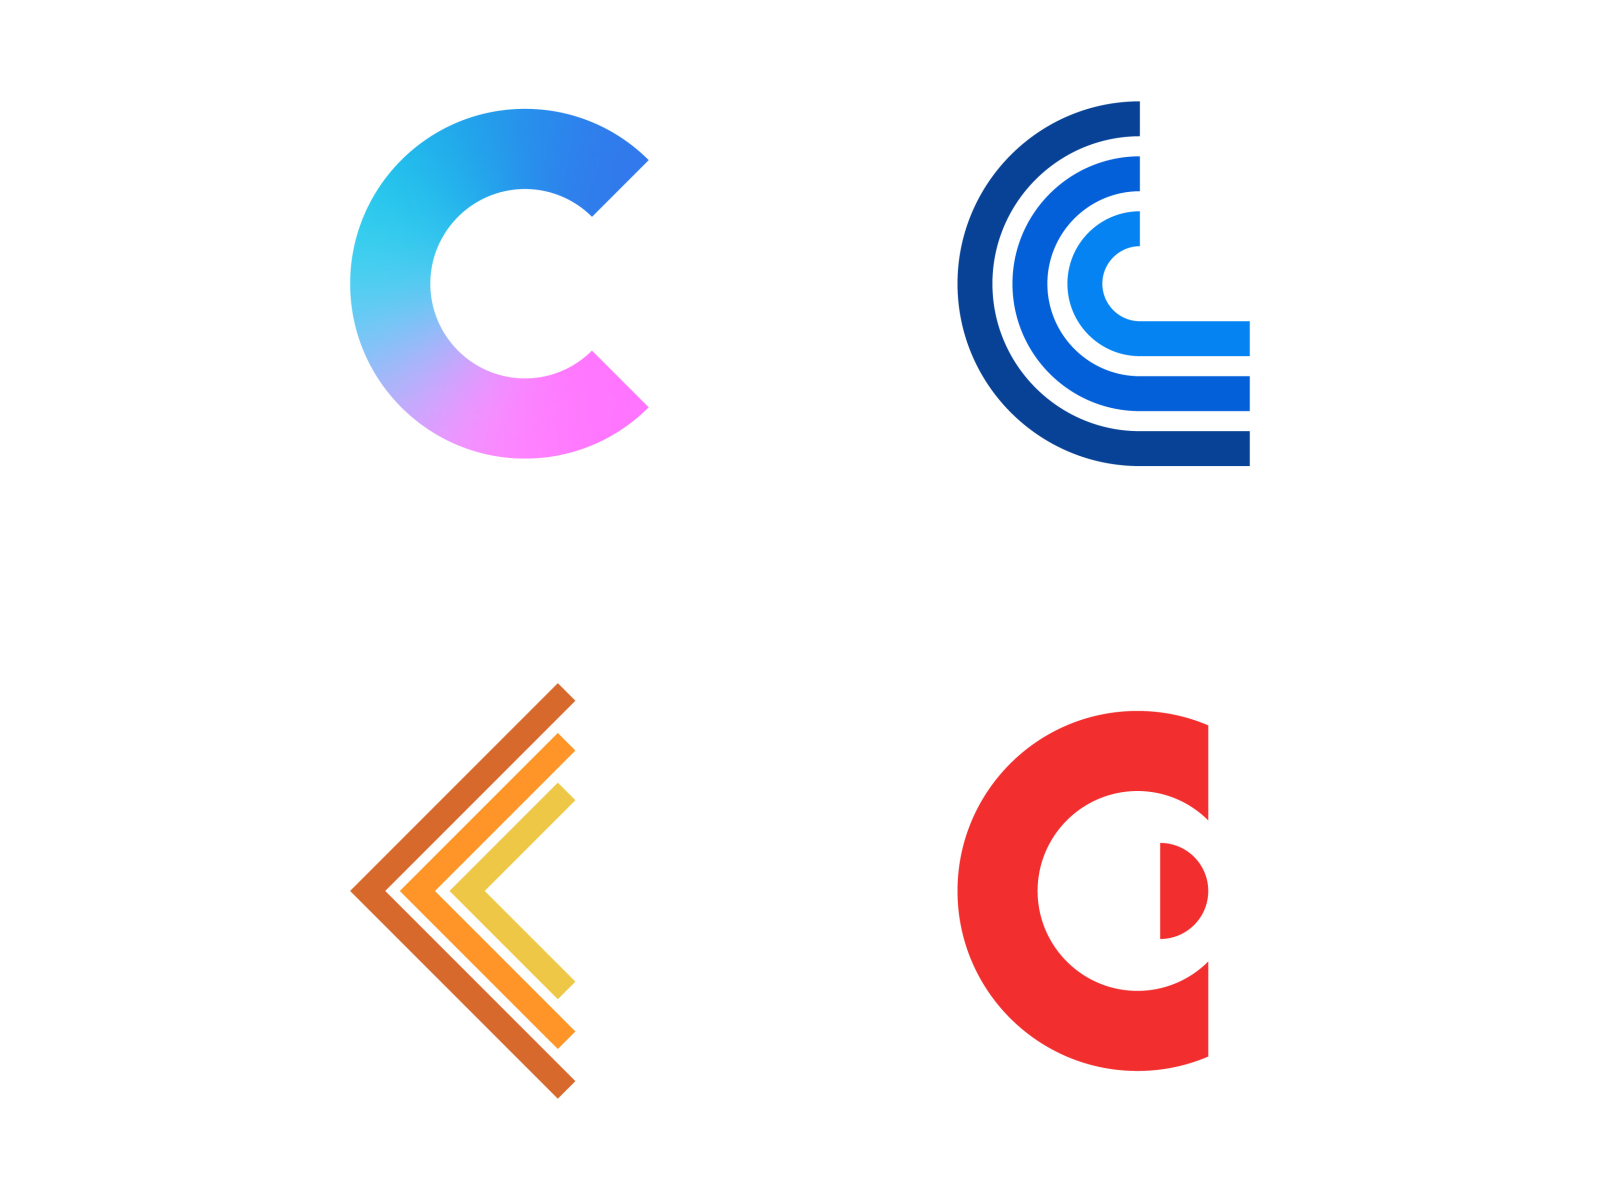 Dribbble - C logos concepten 4 stuks.jpg by Burak Altunkaynak